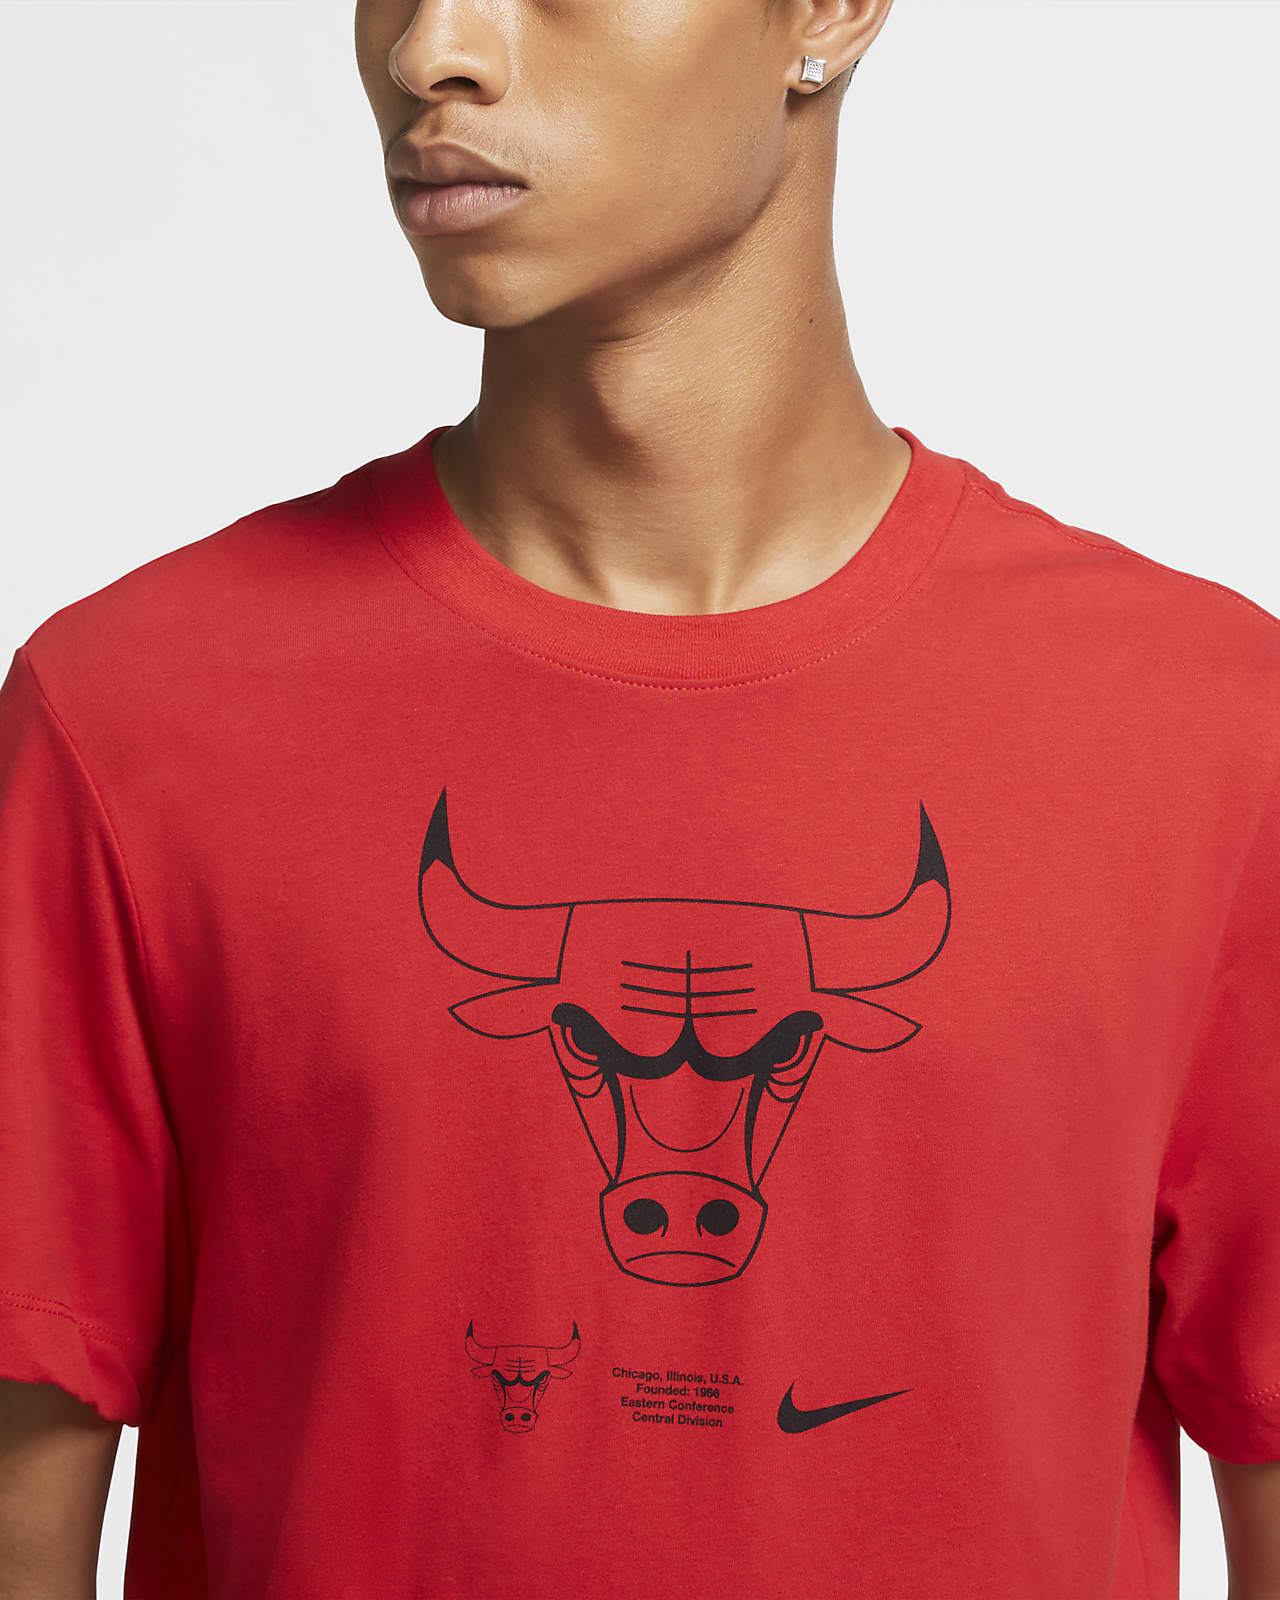 bulls nike shirt